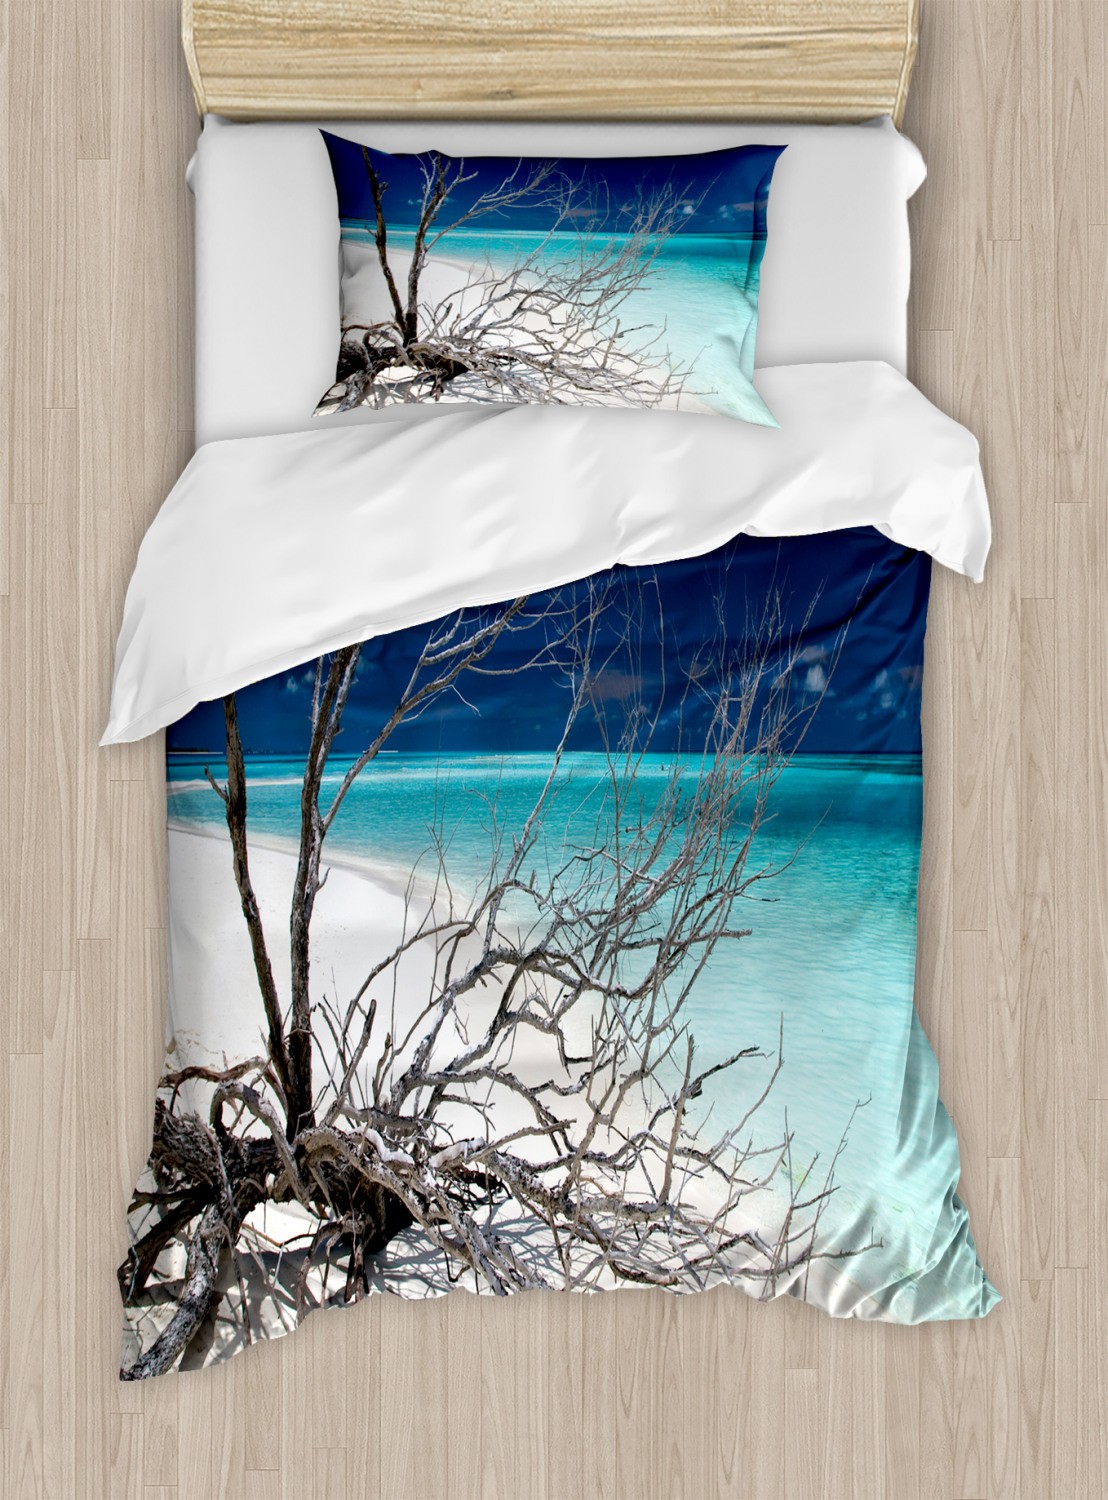 Beach duvet cover set with pillow shams seascape theme 1